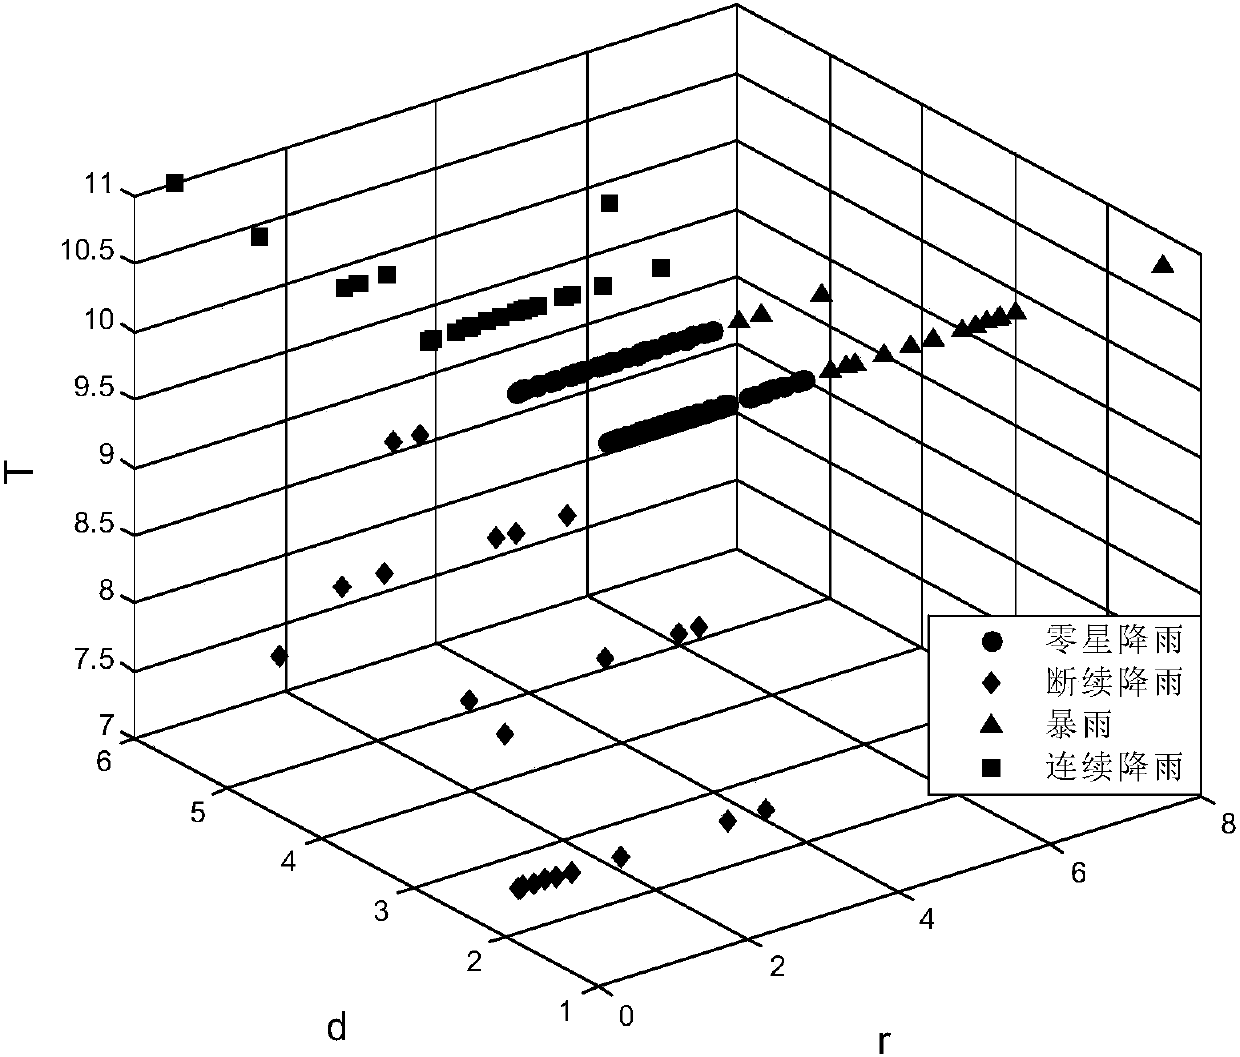 Landslide dynamic response condition analysis method under multiple influence factors